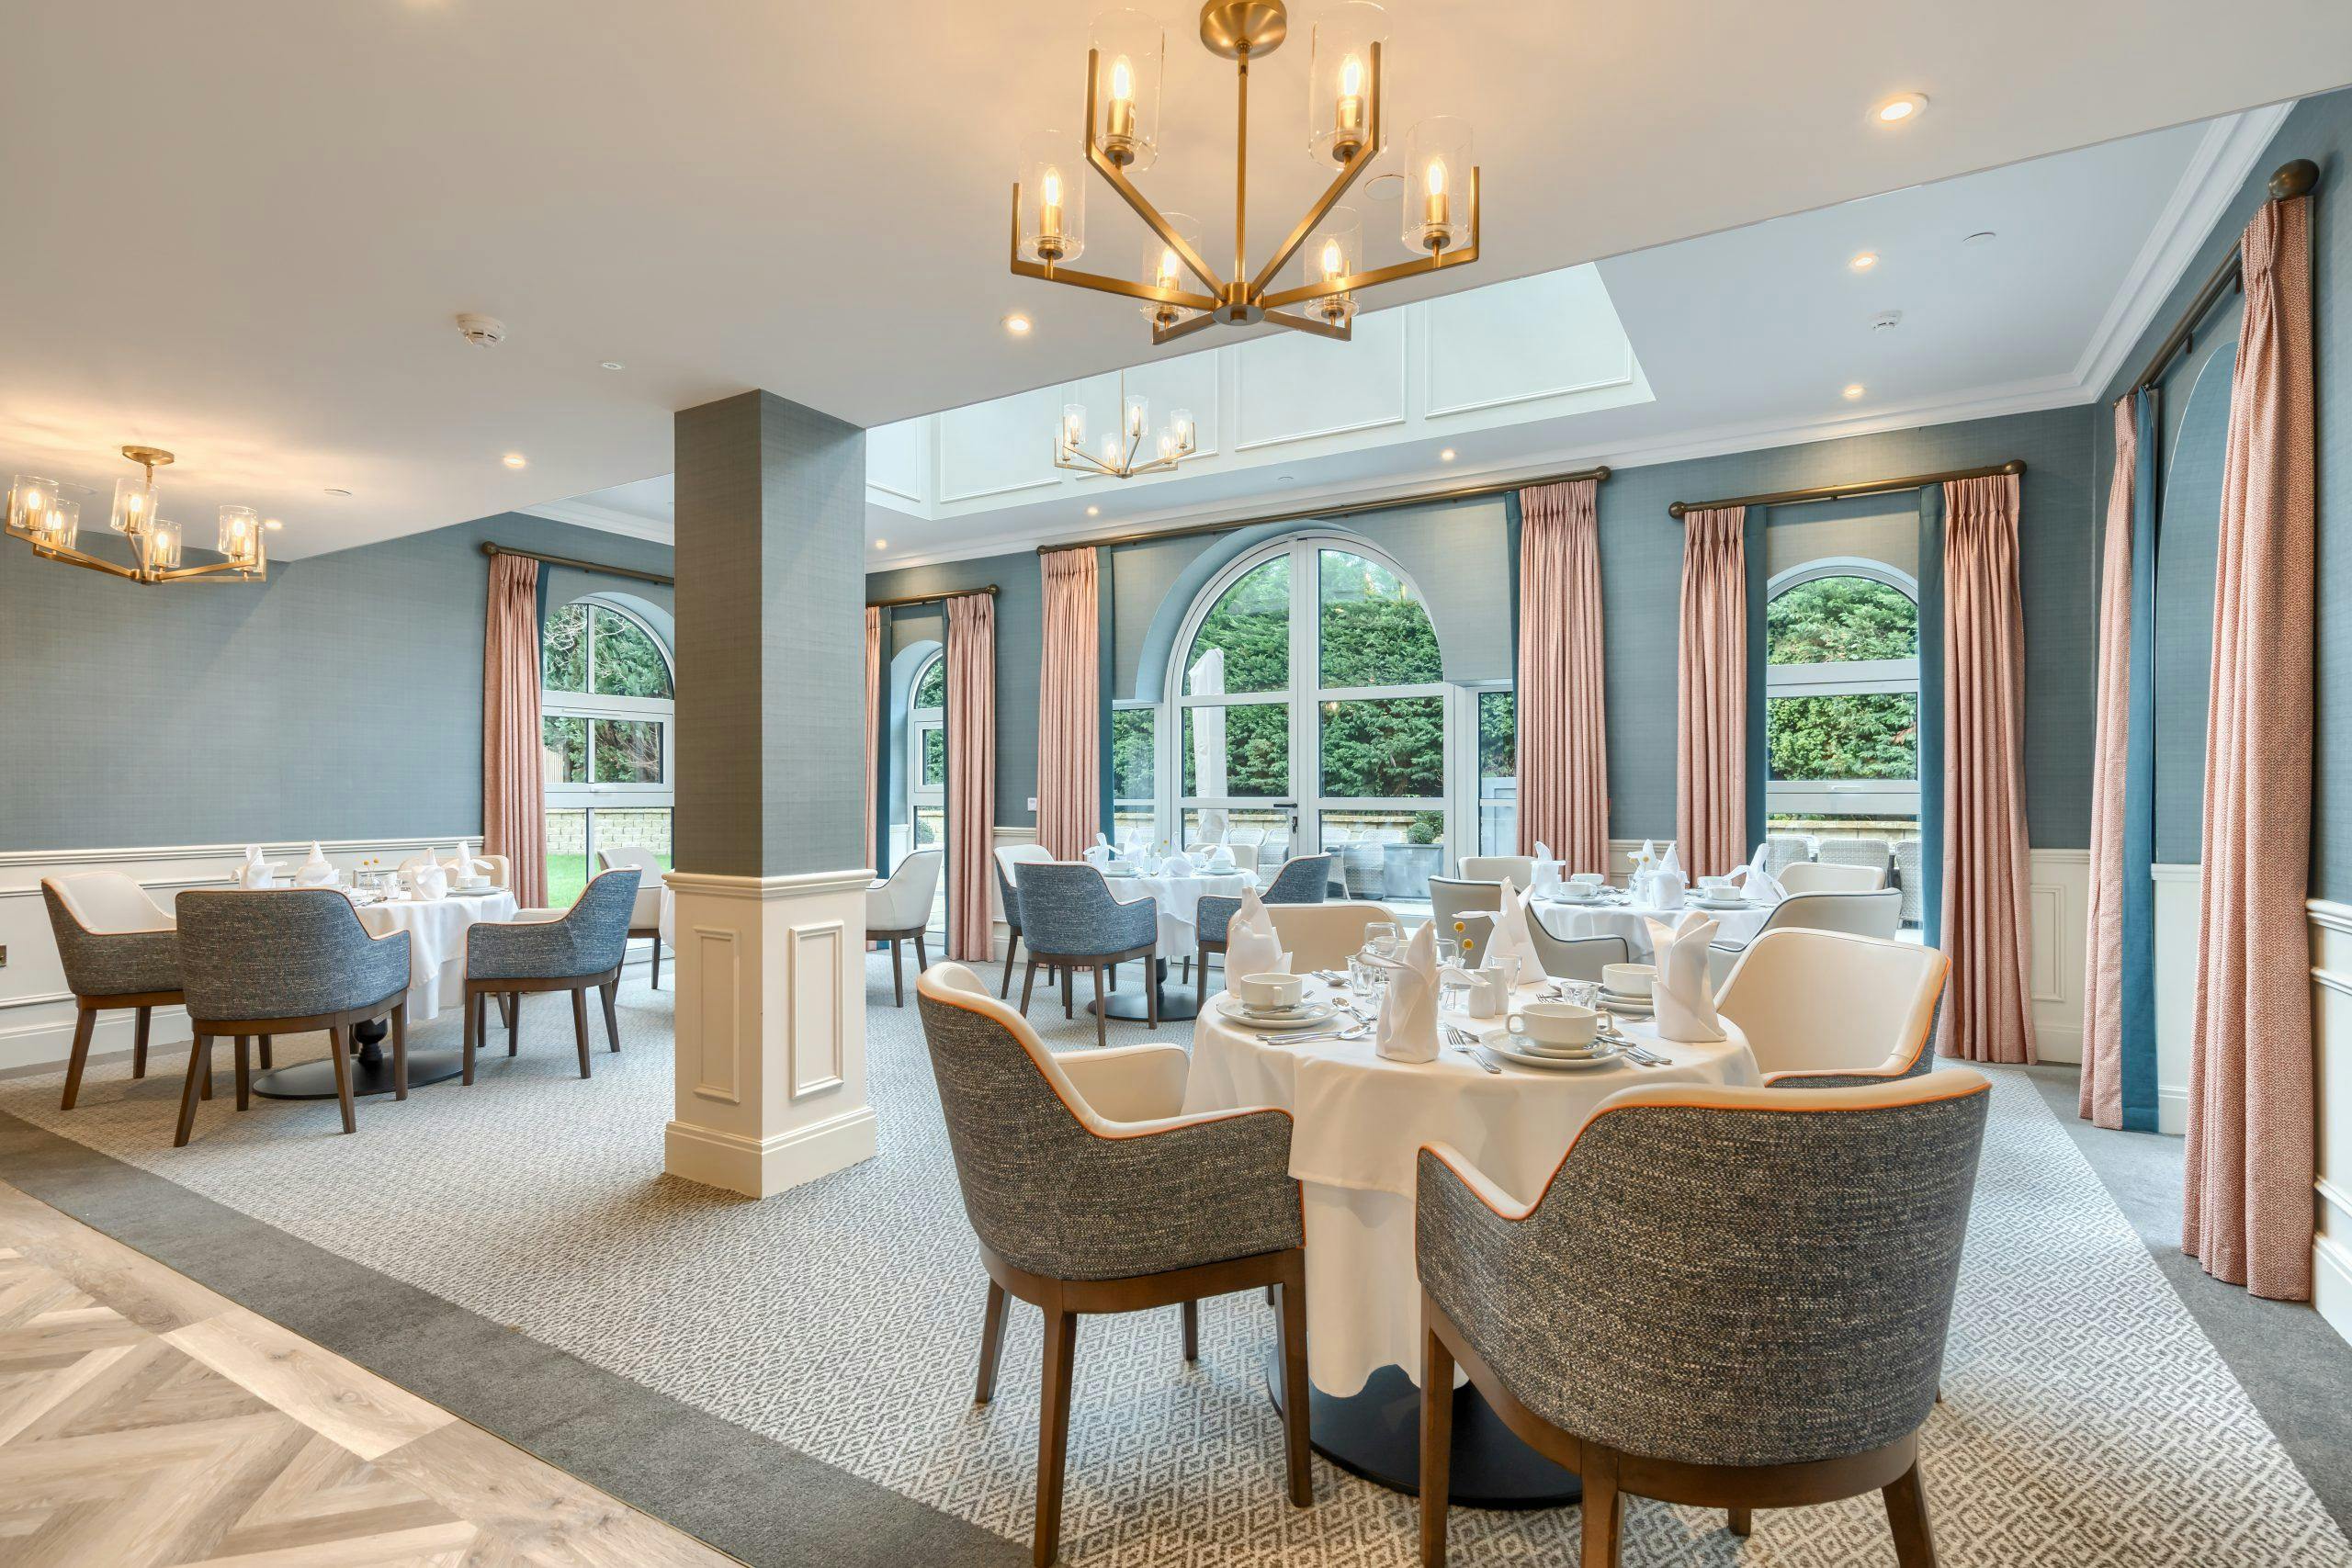 Dining room of Fairfax Manor in Harrogate, Yorkshire